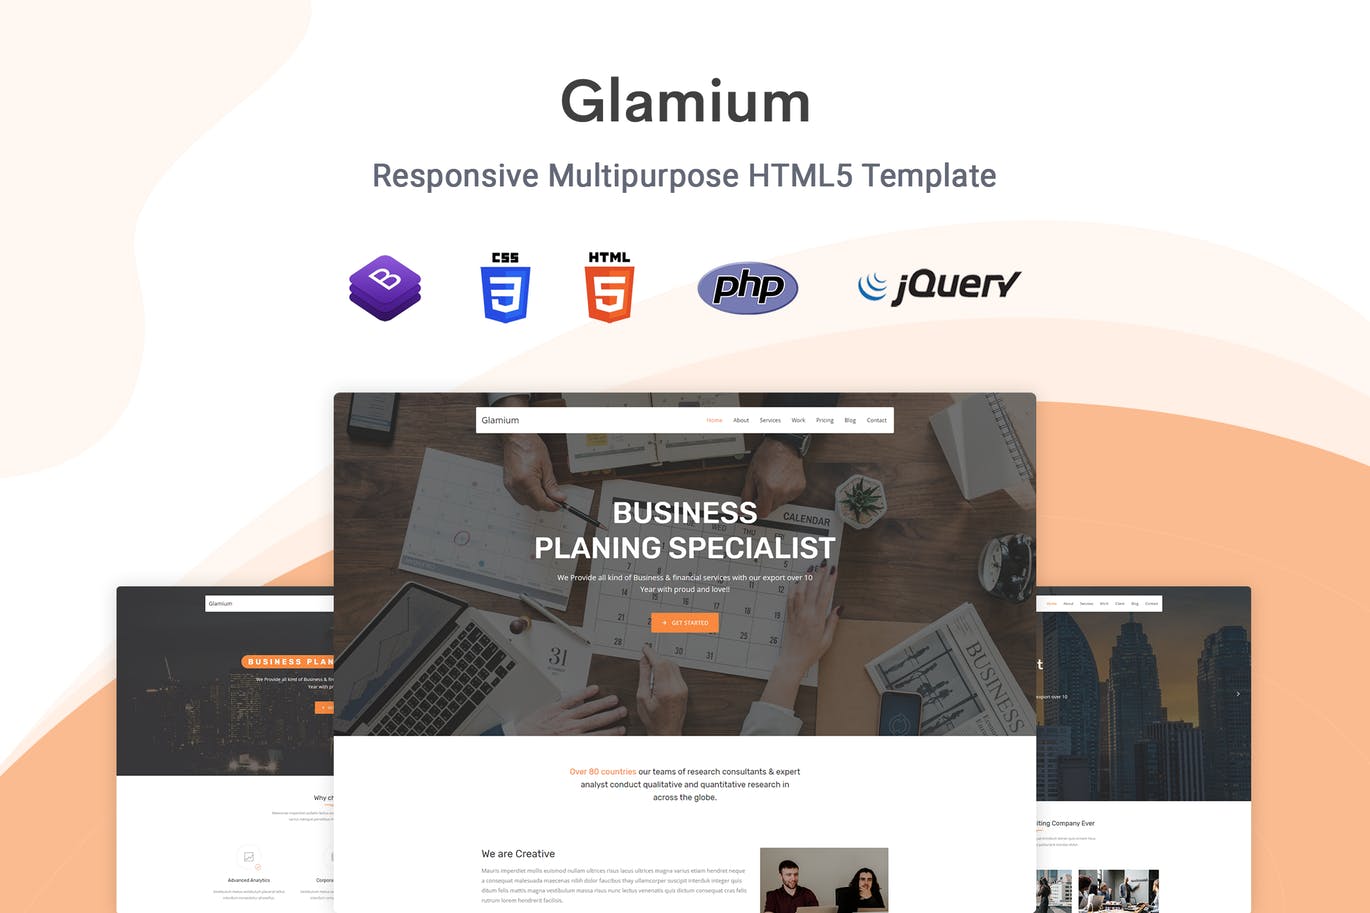 创意单页响应式设计HTML5模板蚂蚁素材精选 Glamium – Responsive Multipurpose HTML5 Template插图